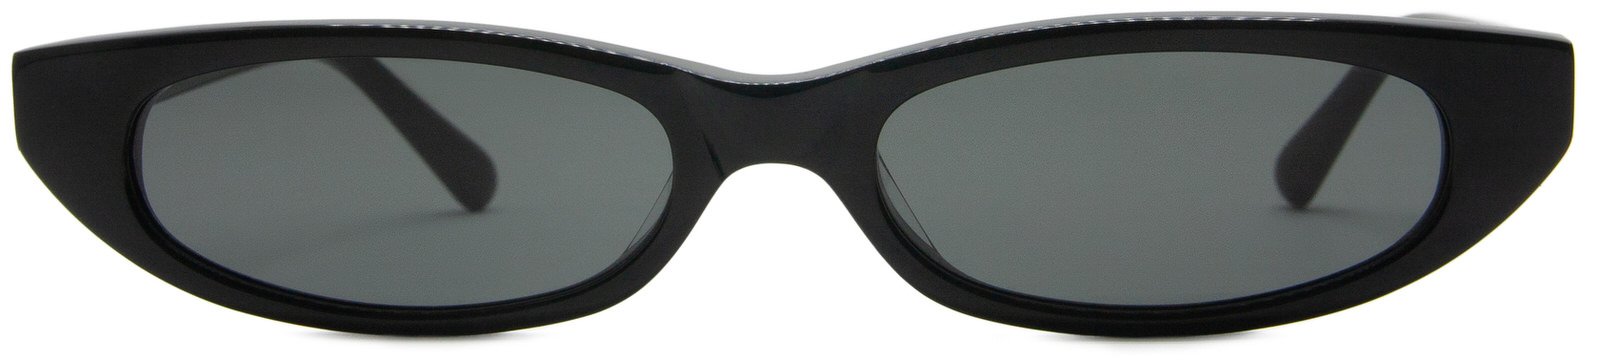 skinny sunglasses eyewear trend